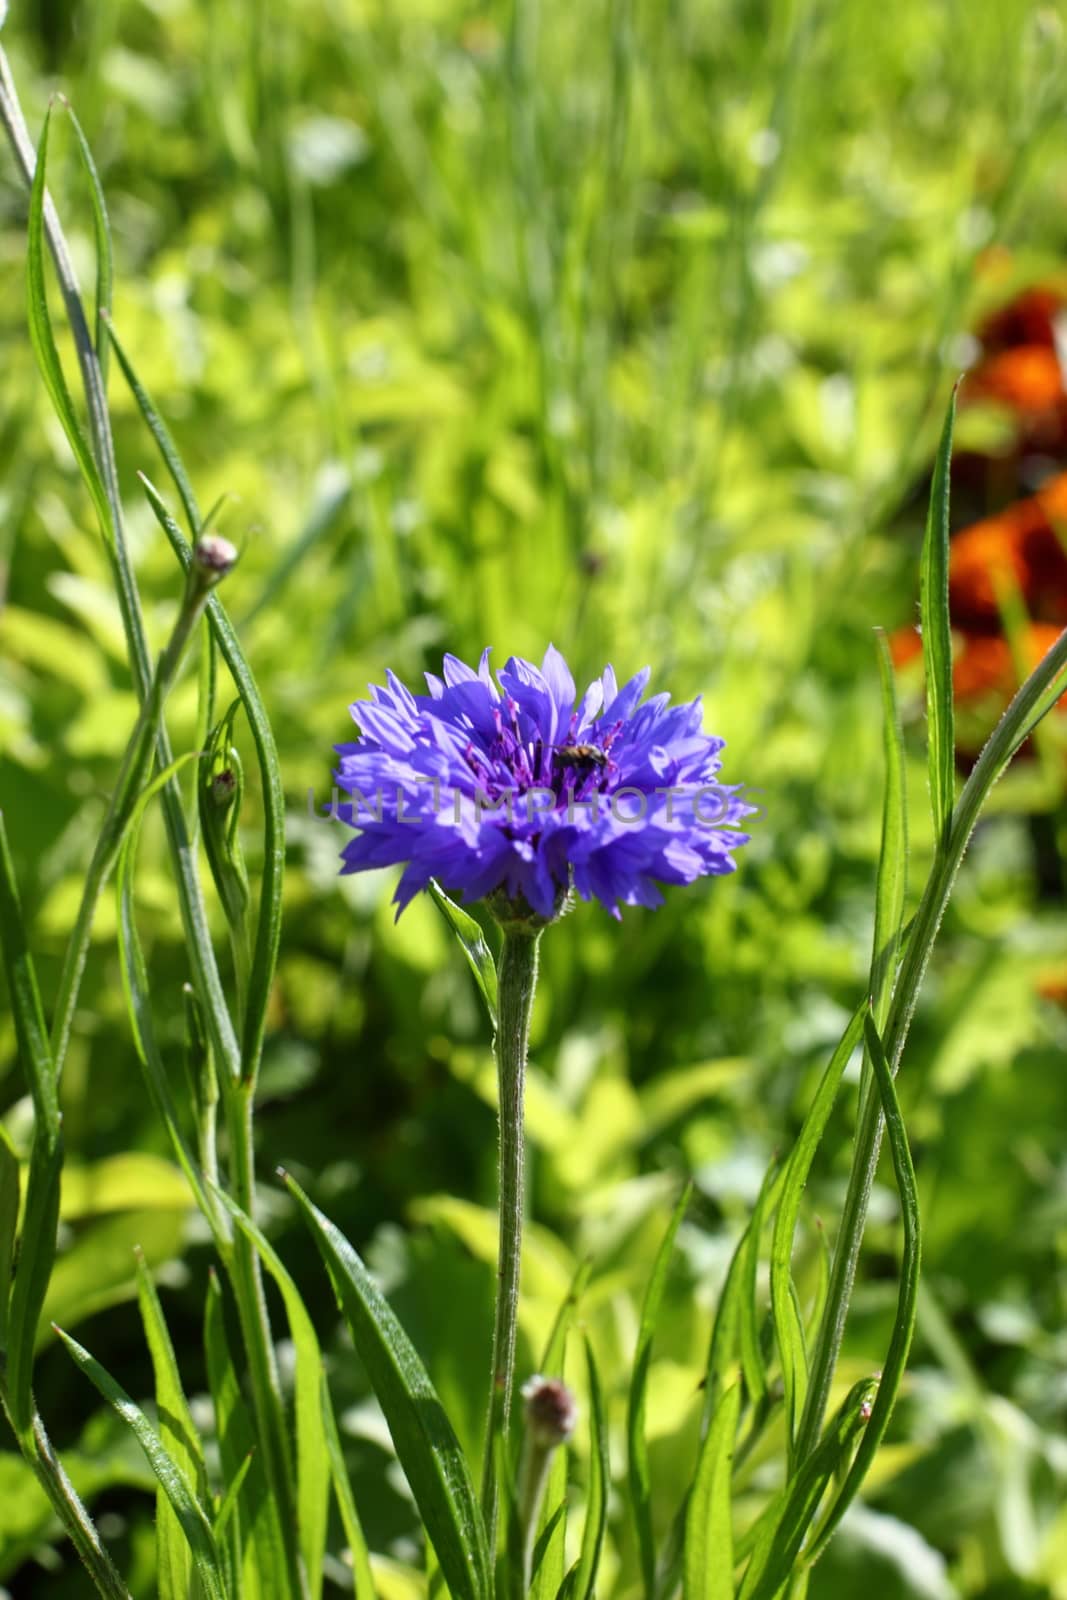 Blue cornflower in garden in the Leningrad region